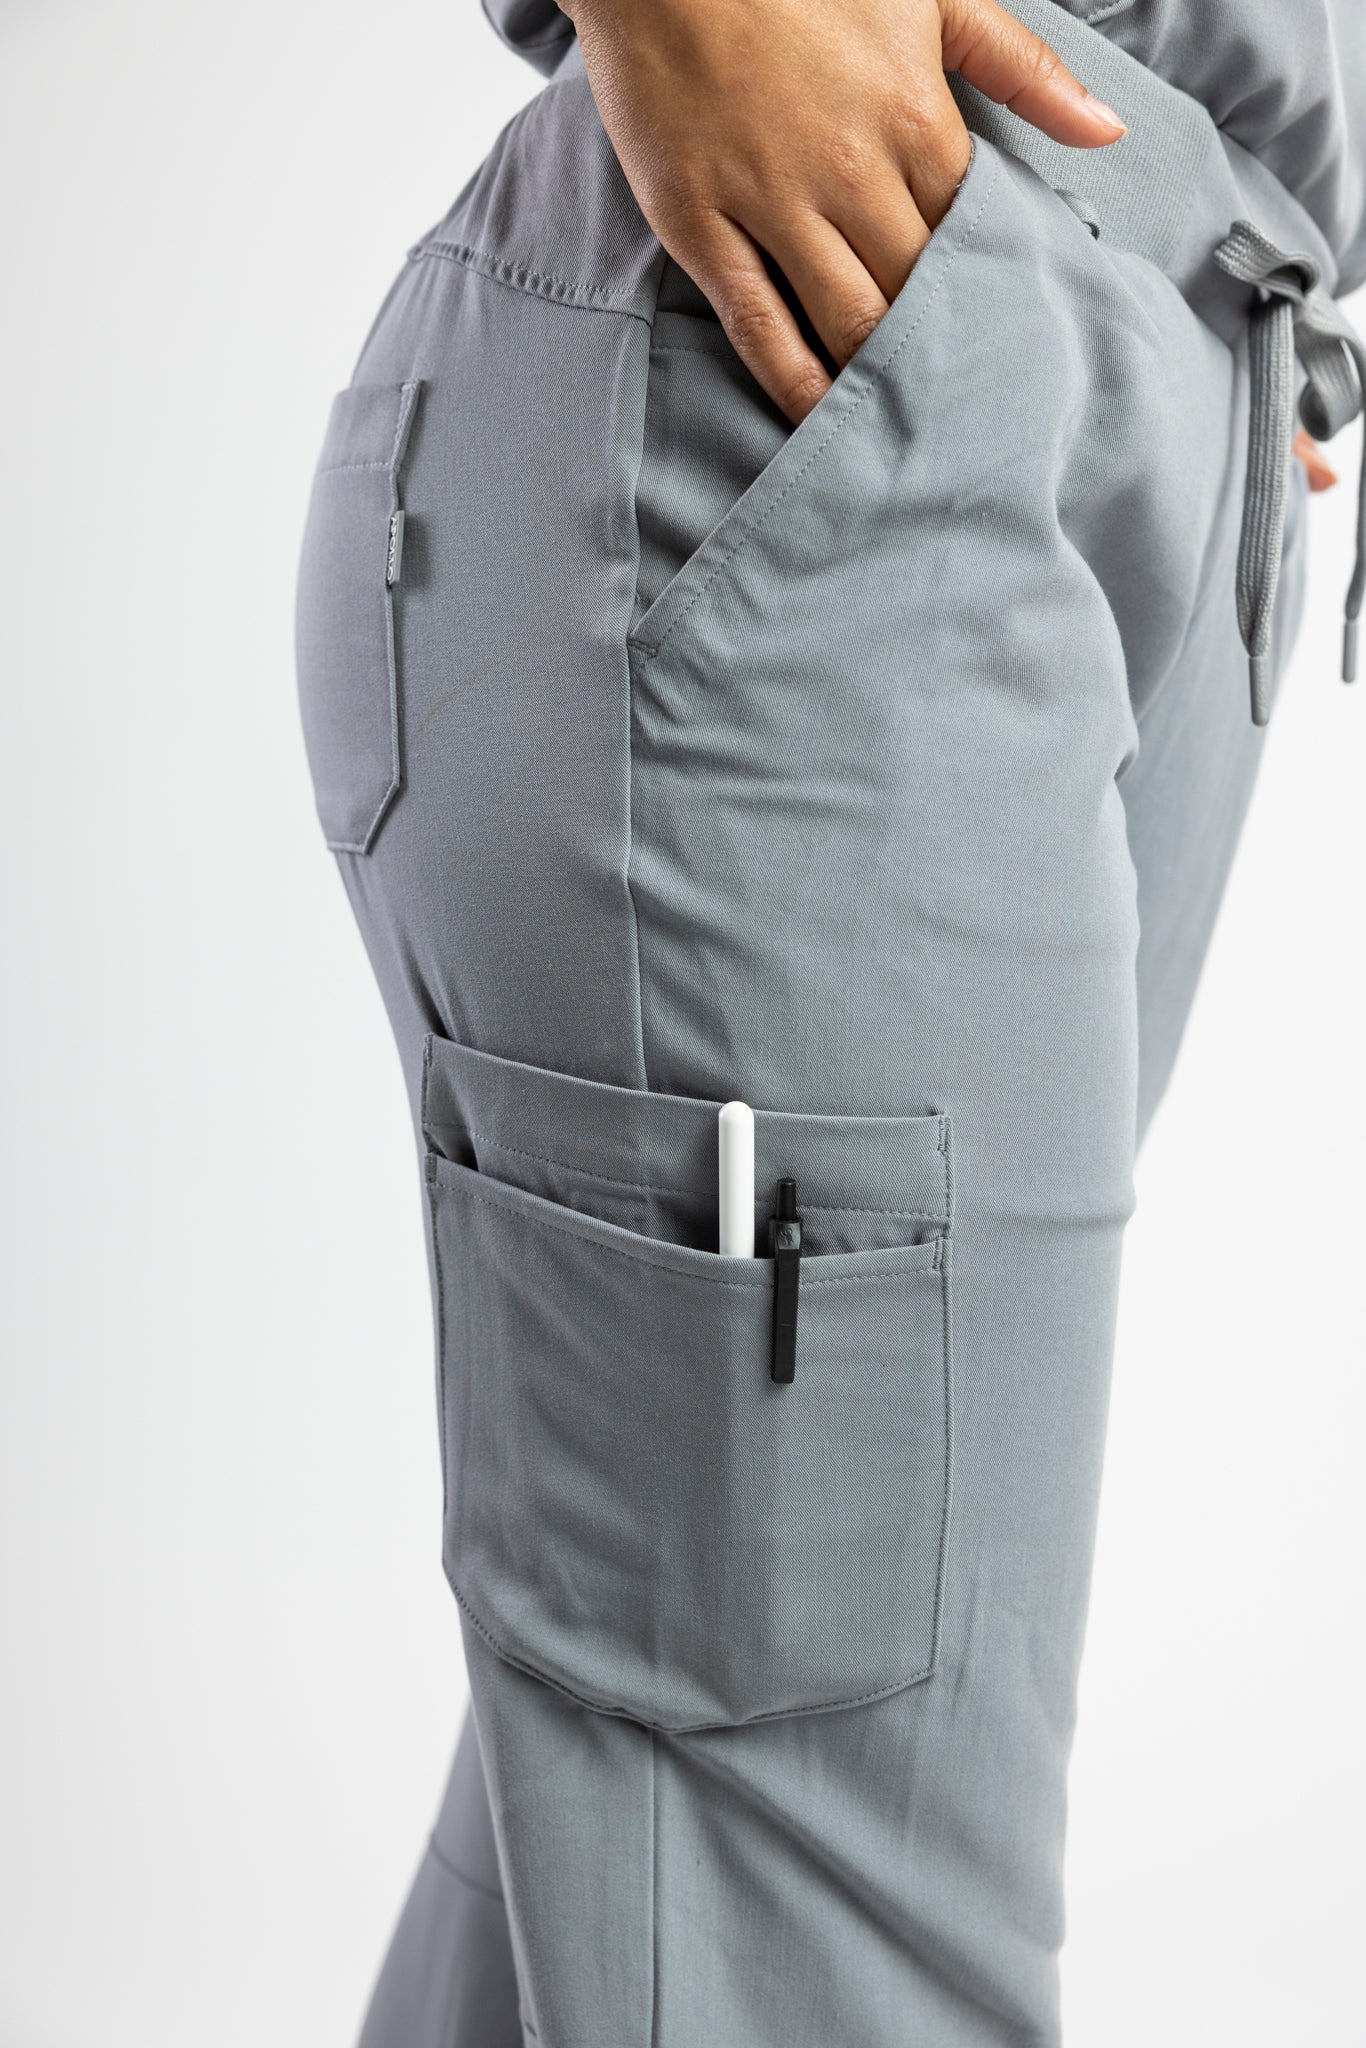 Apollo Scrubs - Hers - Utility Pant for women, antimicrobial, straight leg loose style bottom